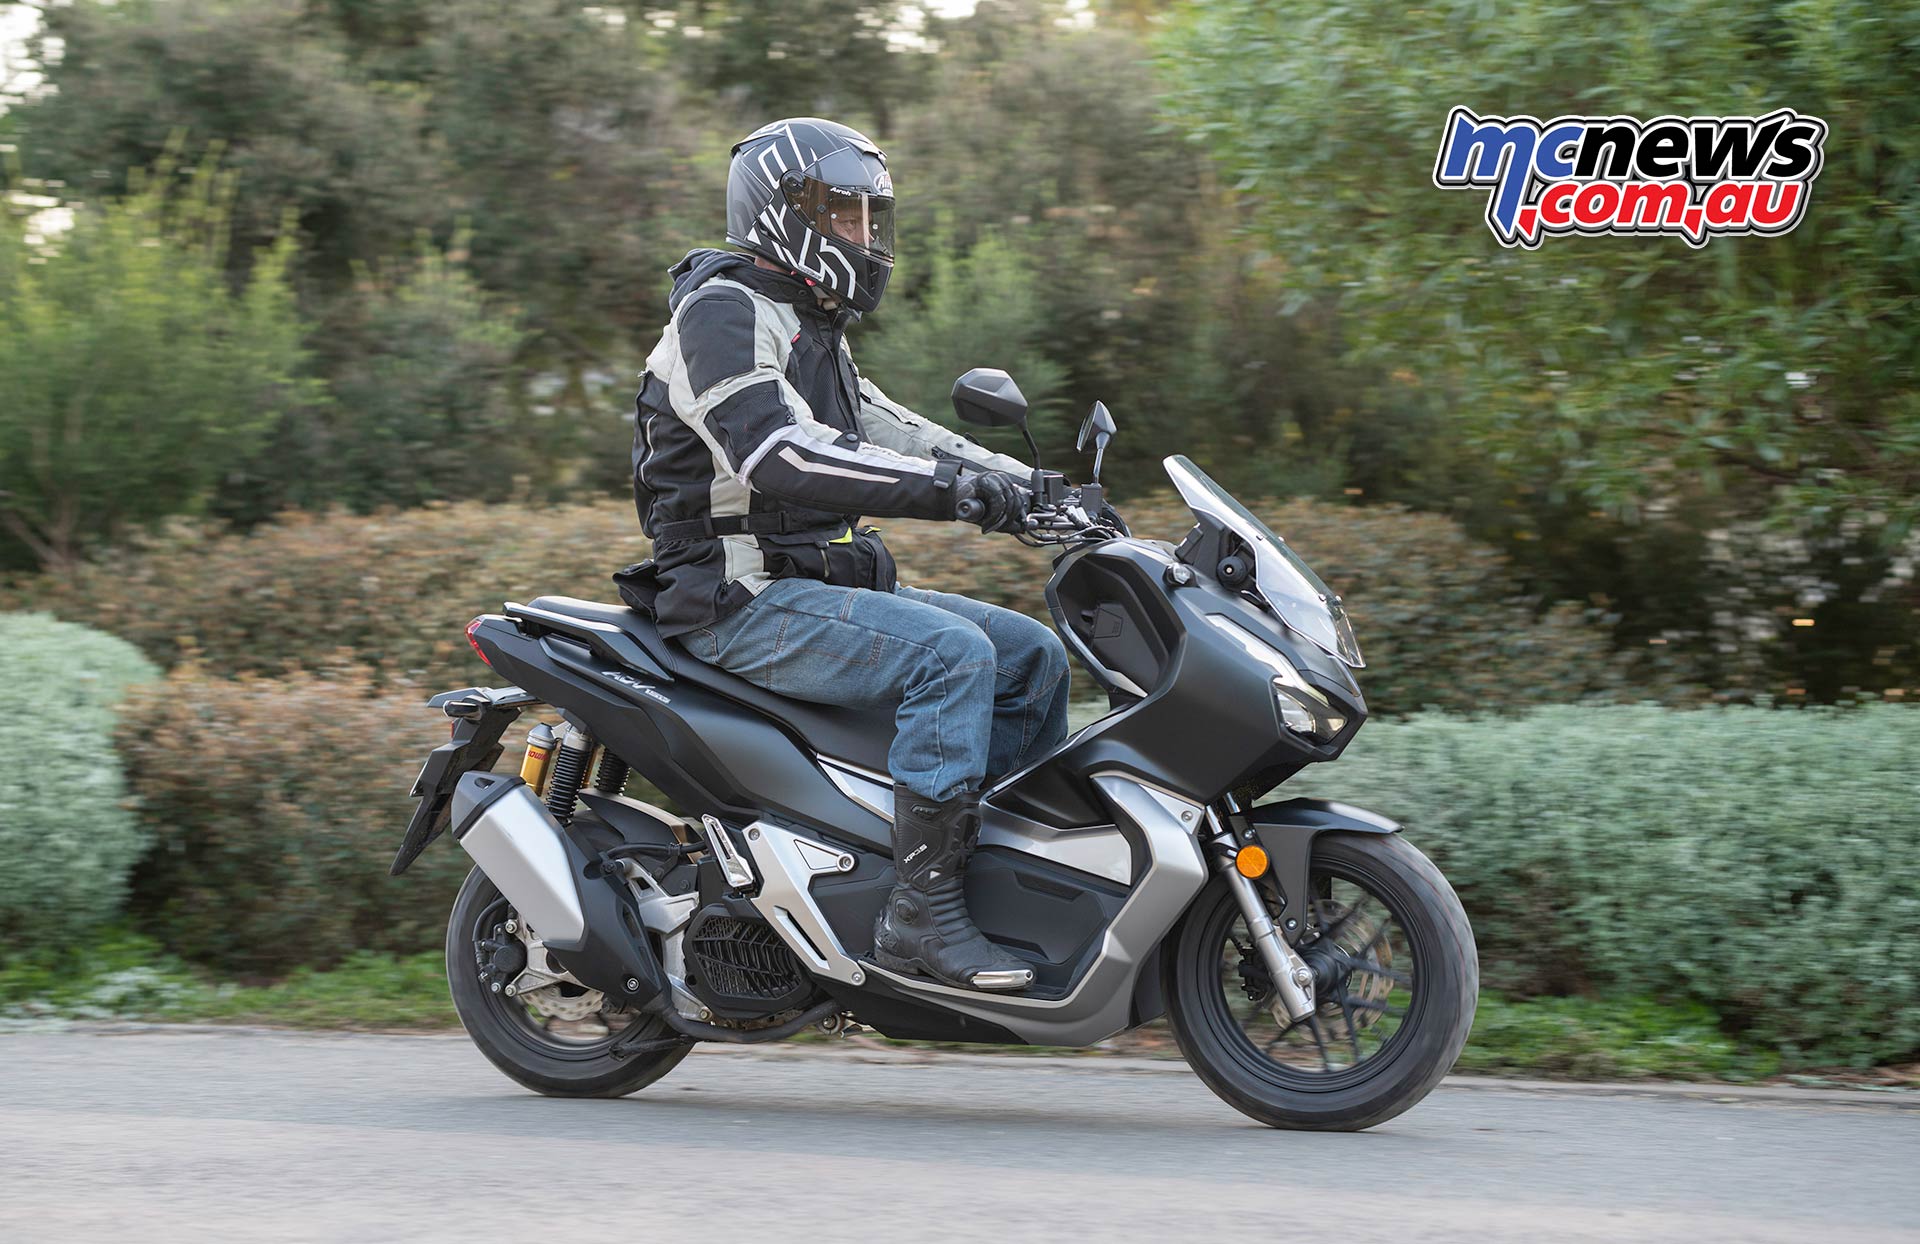 Motorcycle Review Honda Adv 150 Versus Yamaha Yzf R15 Motorcycle News Sport And Reviews